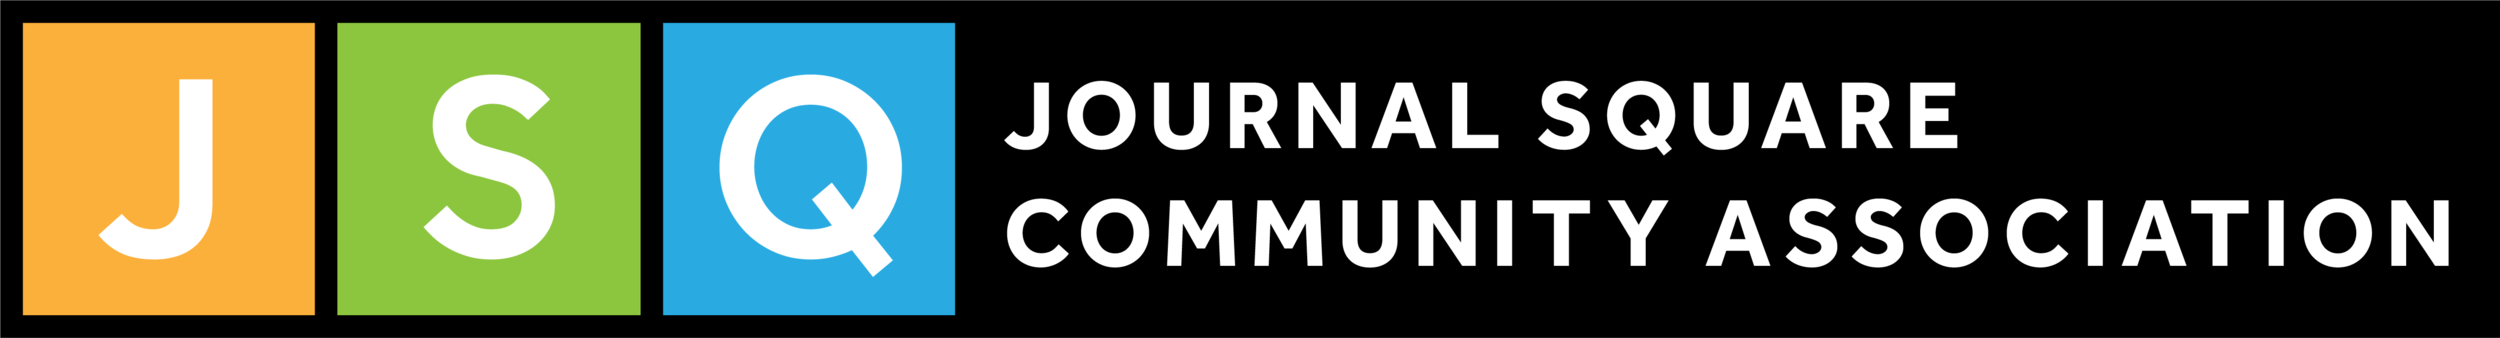 Journal Square Community Association